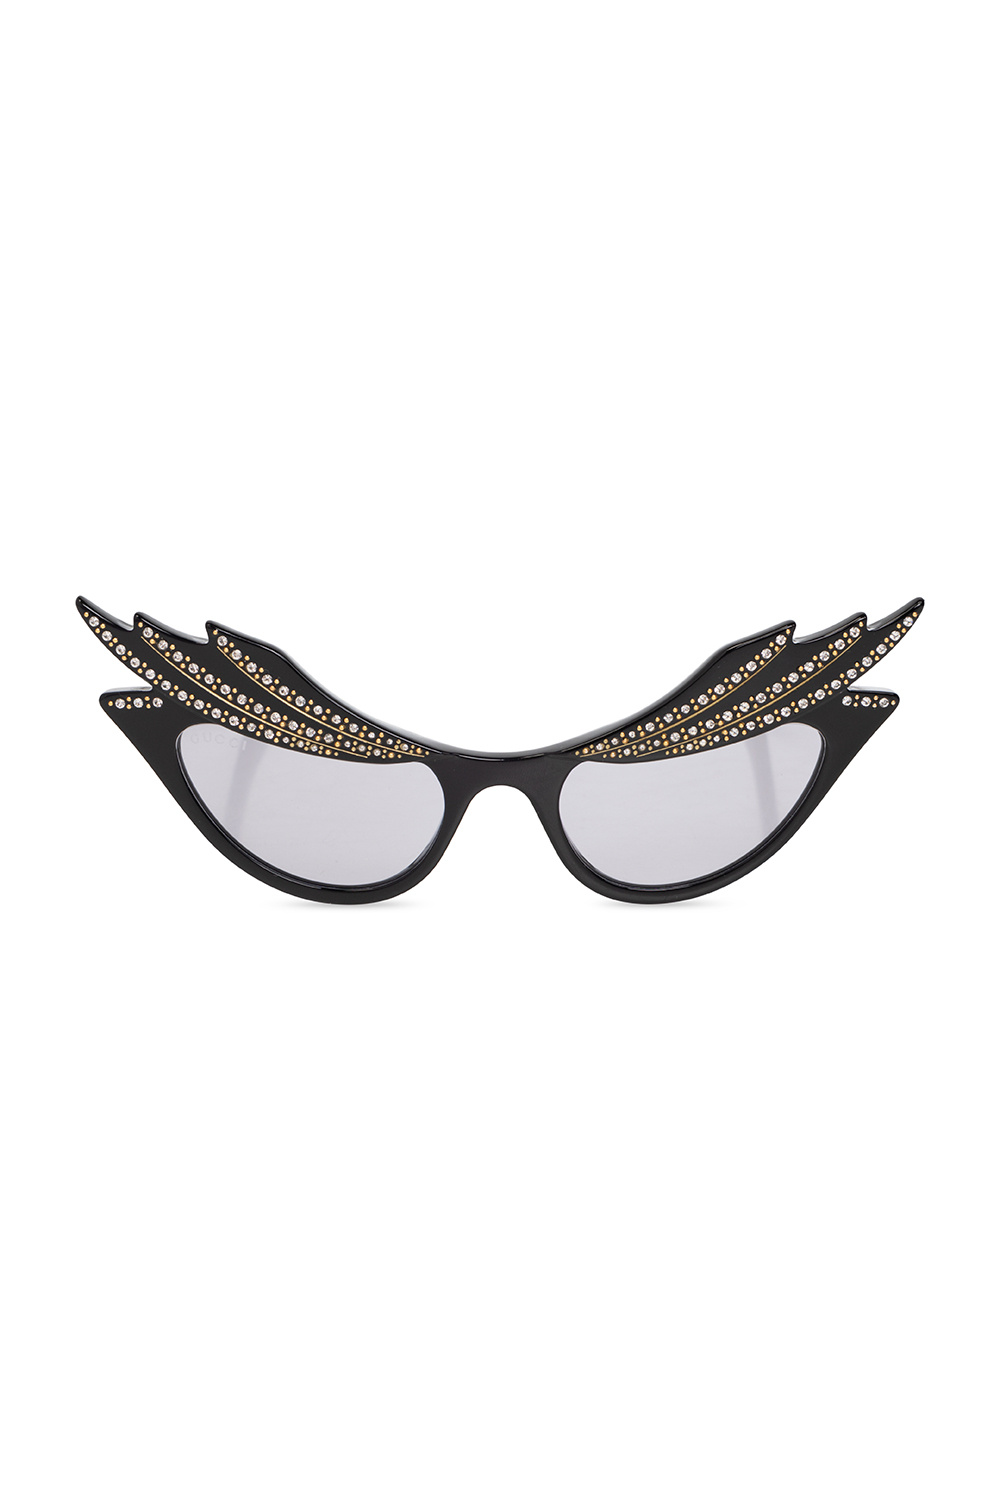 Gucci Eyewear GG cat-eye frame glasses